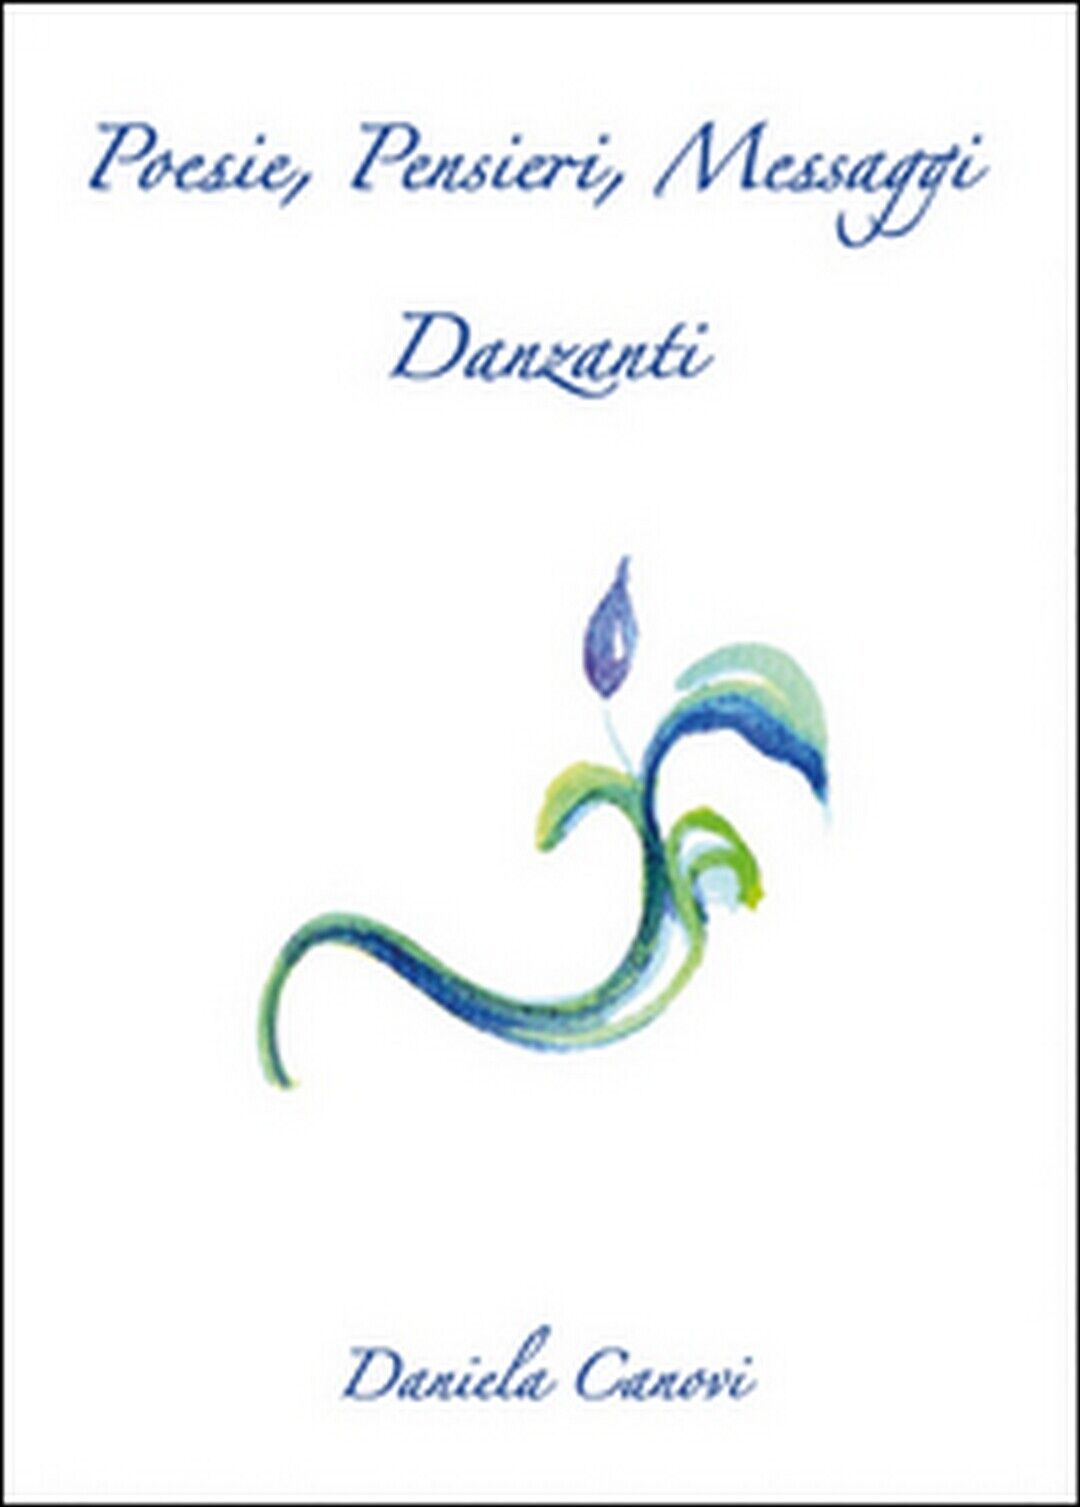 Poesie, Pensieri, Messaggi Danzanti  di Daniela Canovi,  2015,  Youcanprint